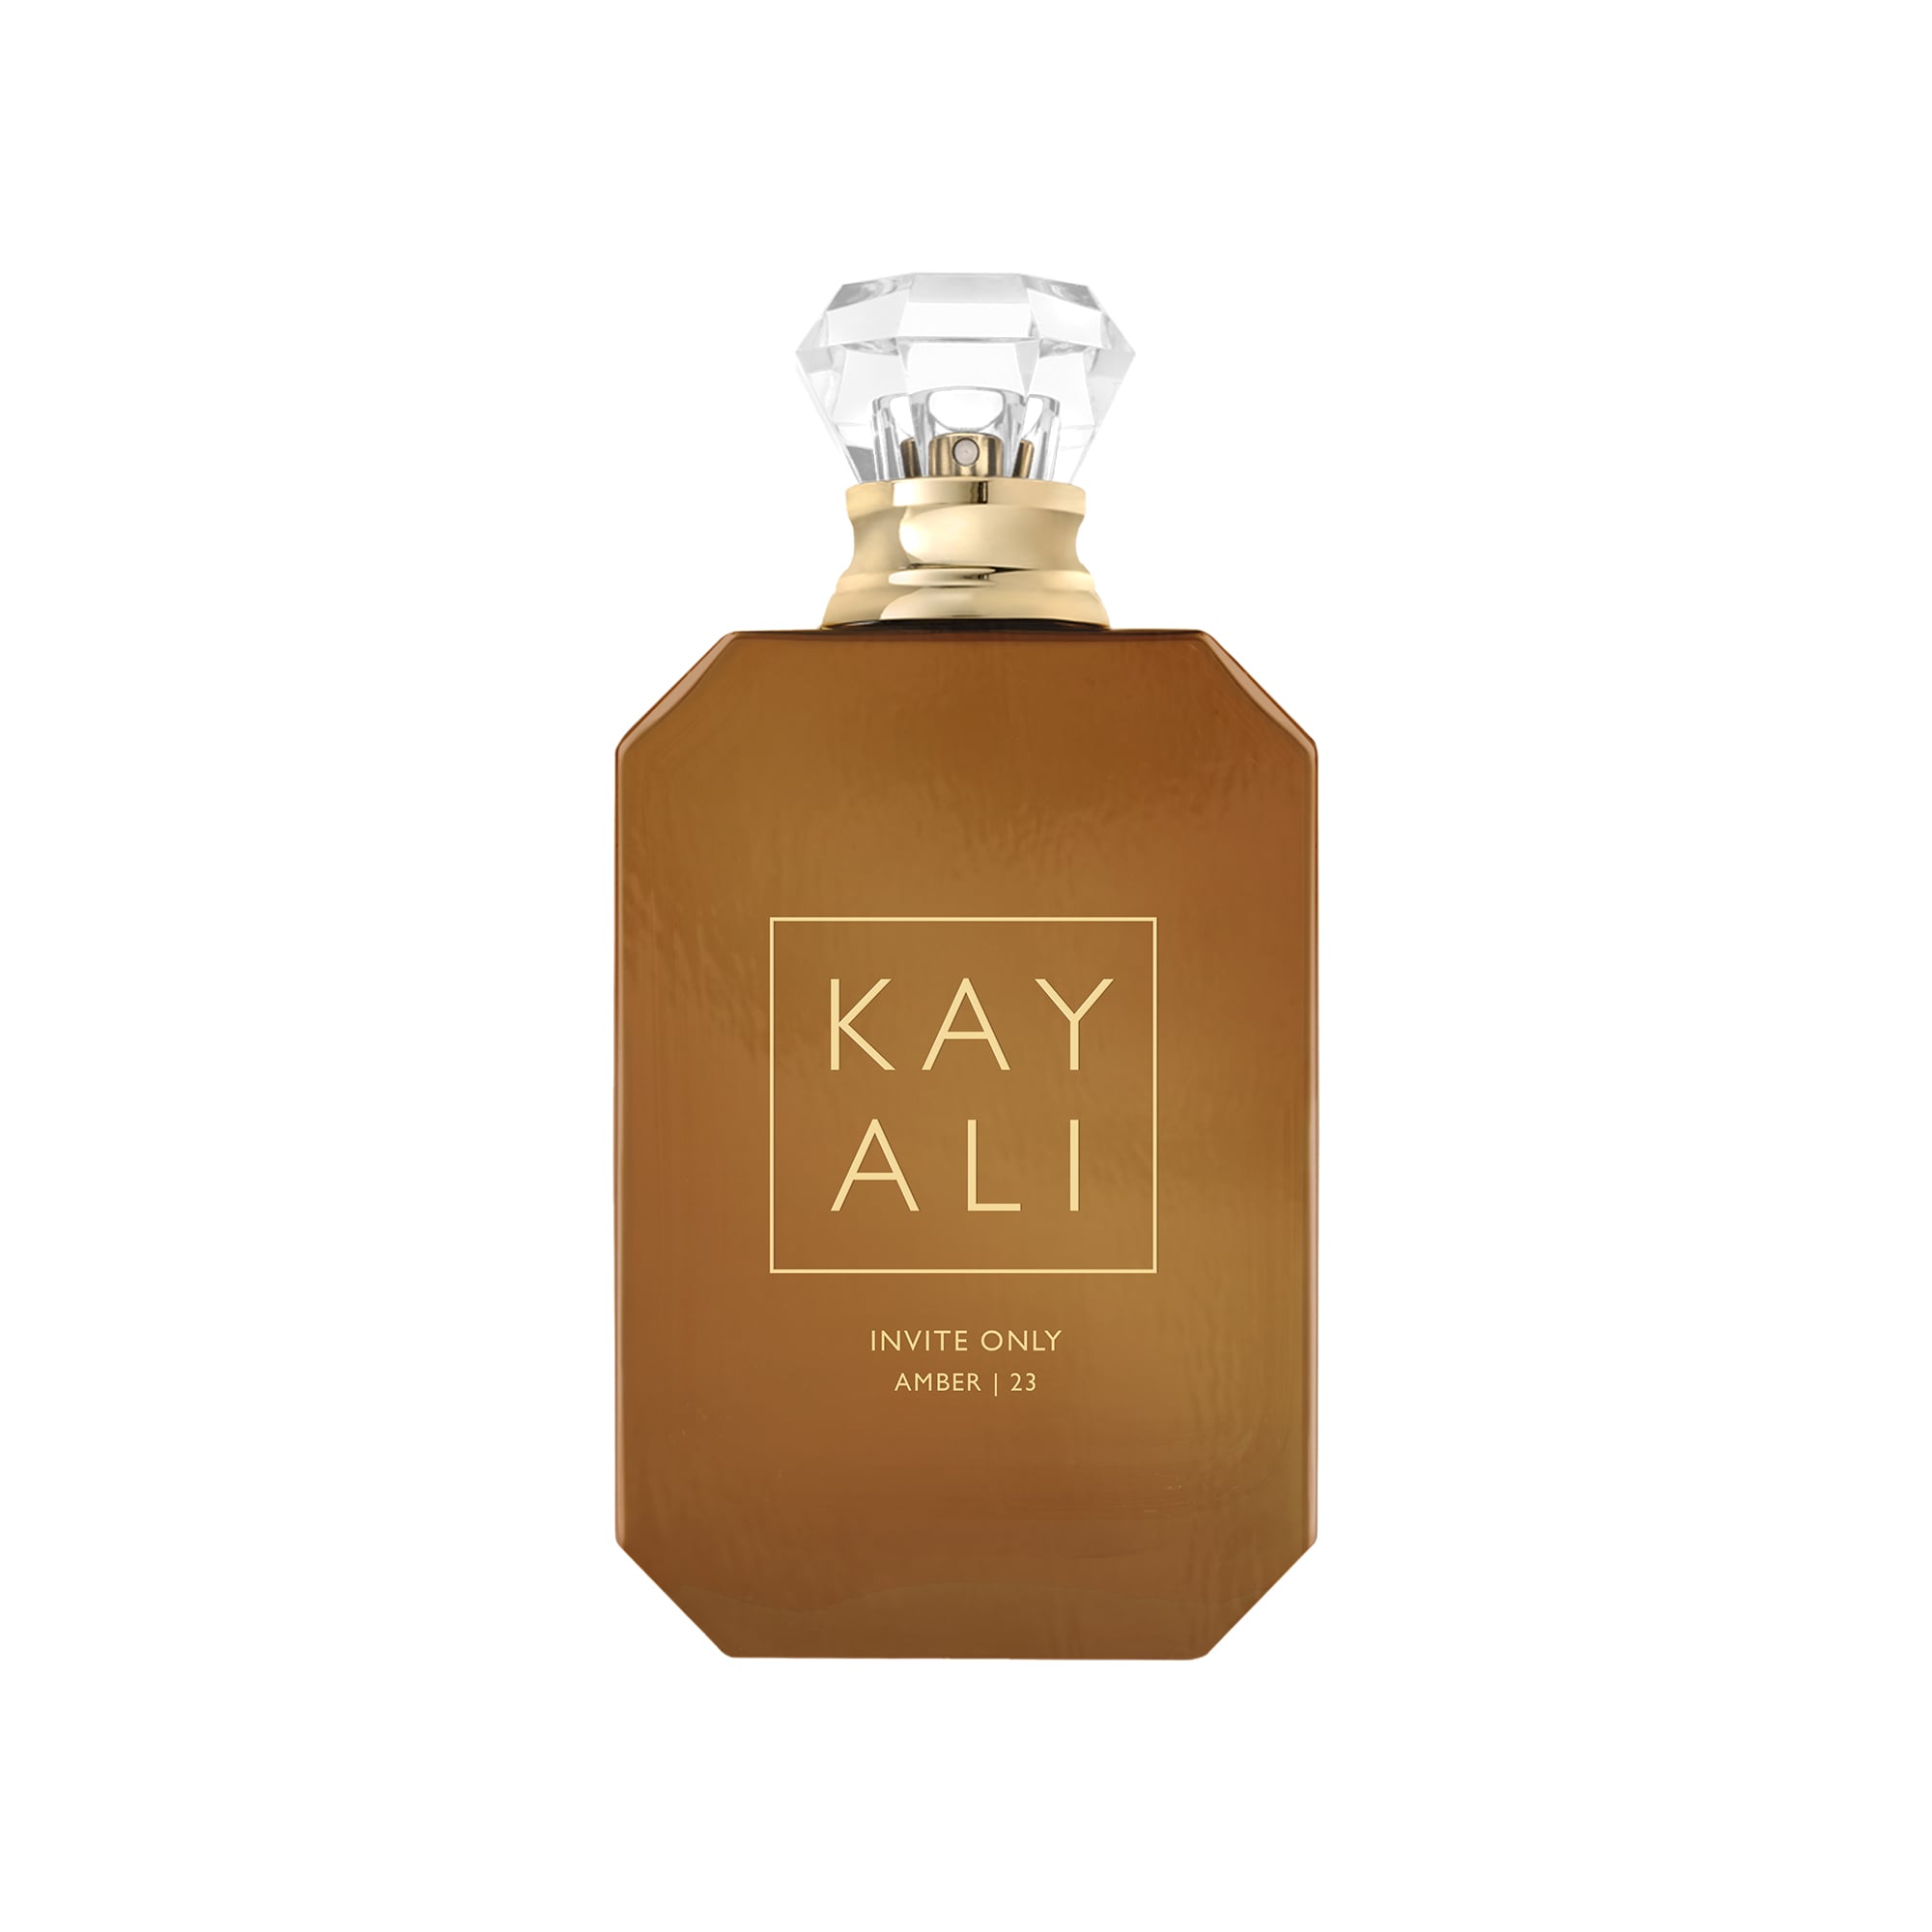 Kayali Invite Only Amber Is Mona Kattan's Sexy New Fragrance | POPSUGAR ...